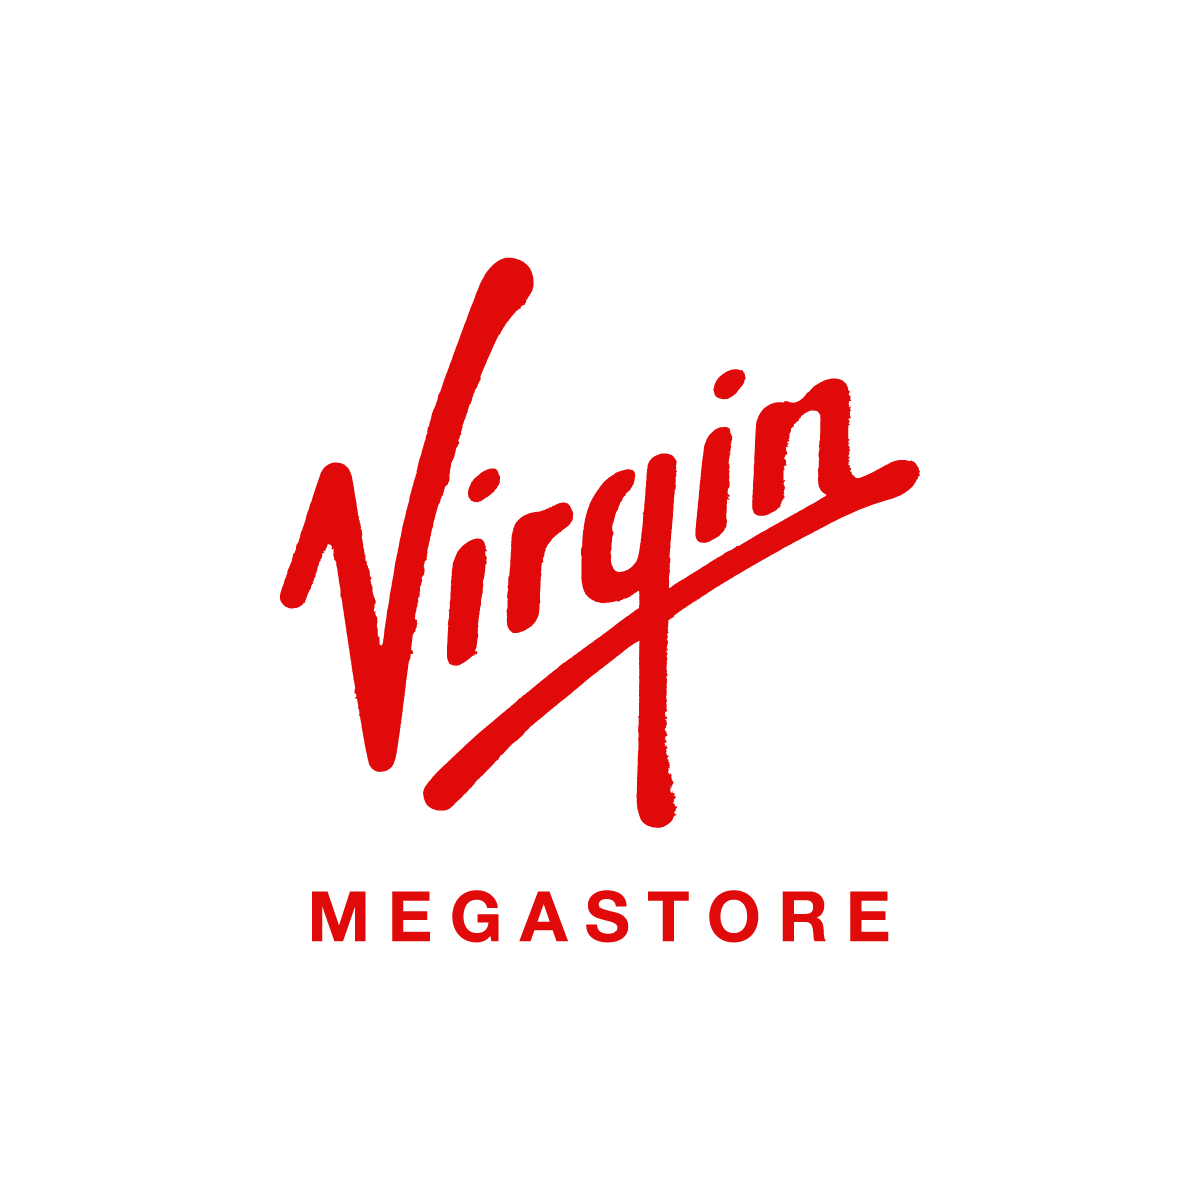 Virgin Megastore Dubai 04 325 3330